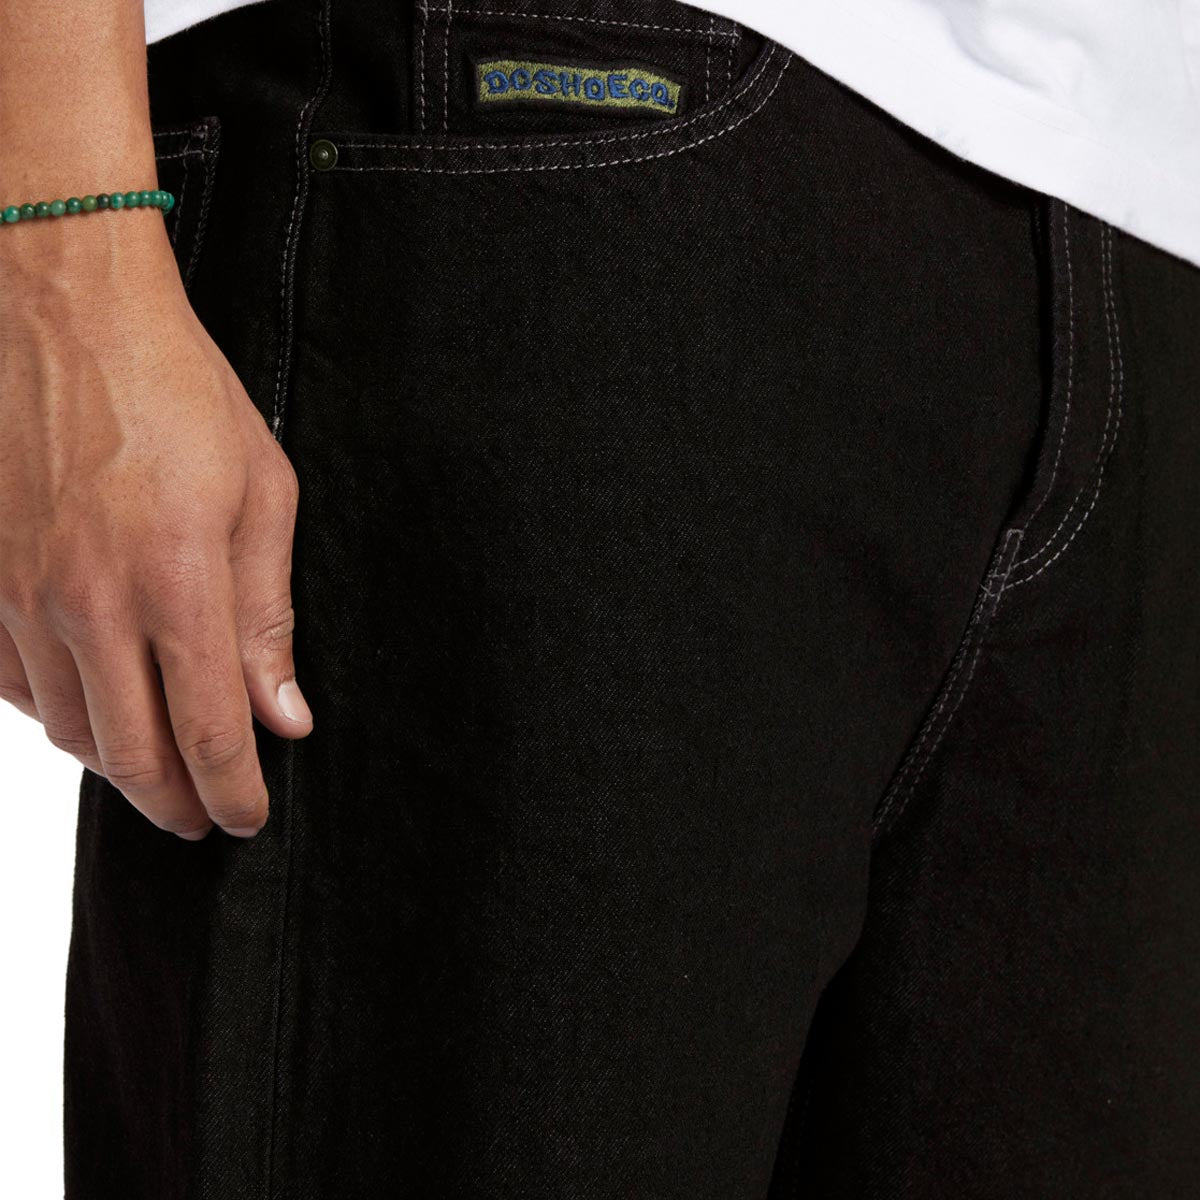 DC Worker Baggy Denim Shorts - Black Tint image 3